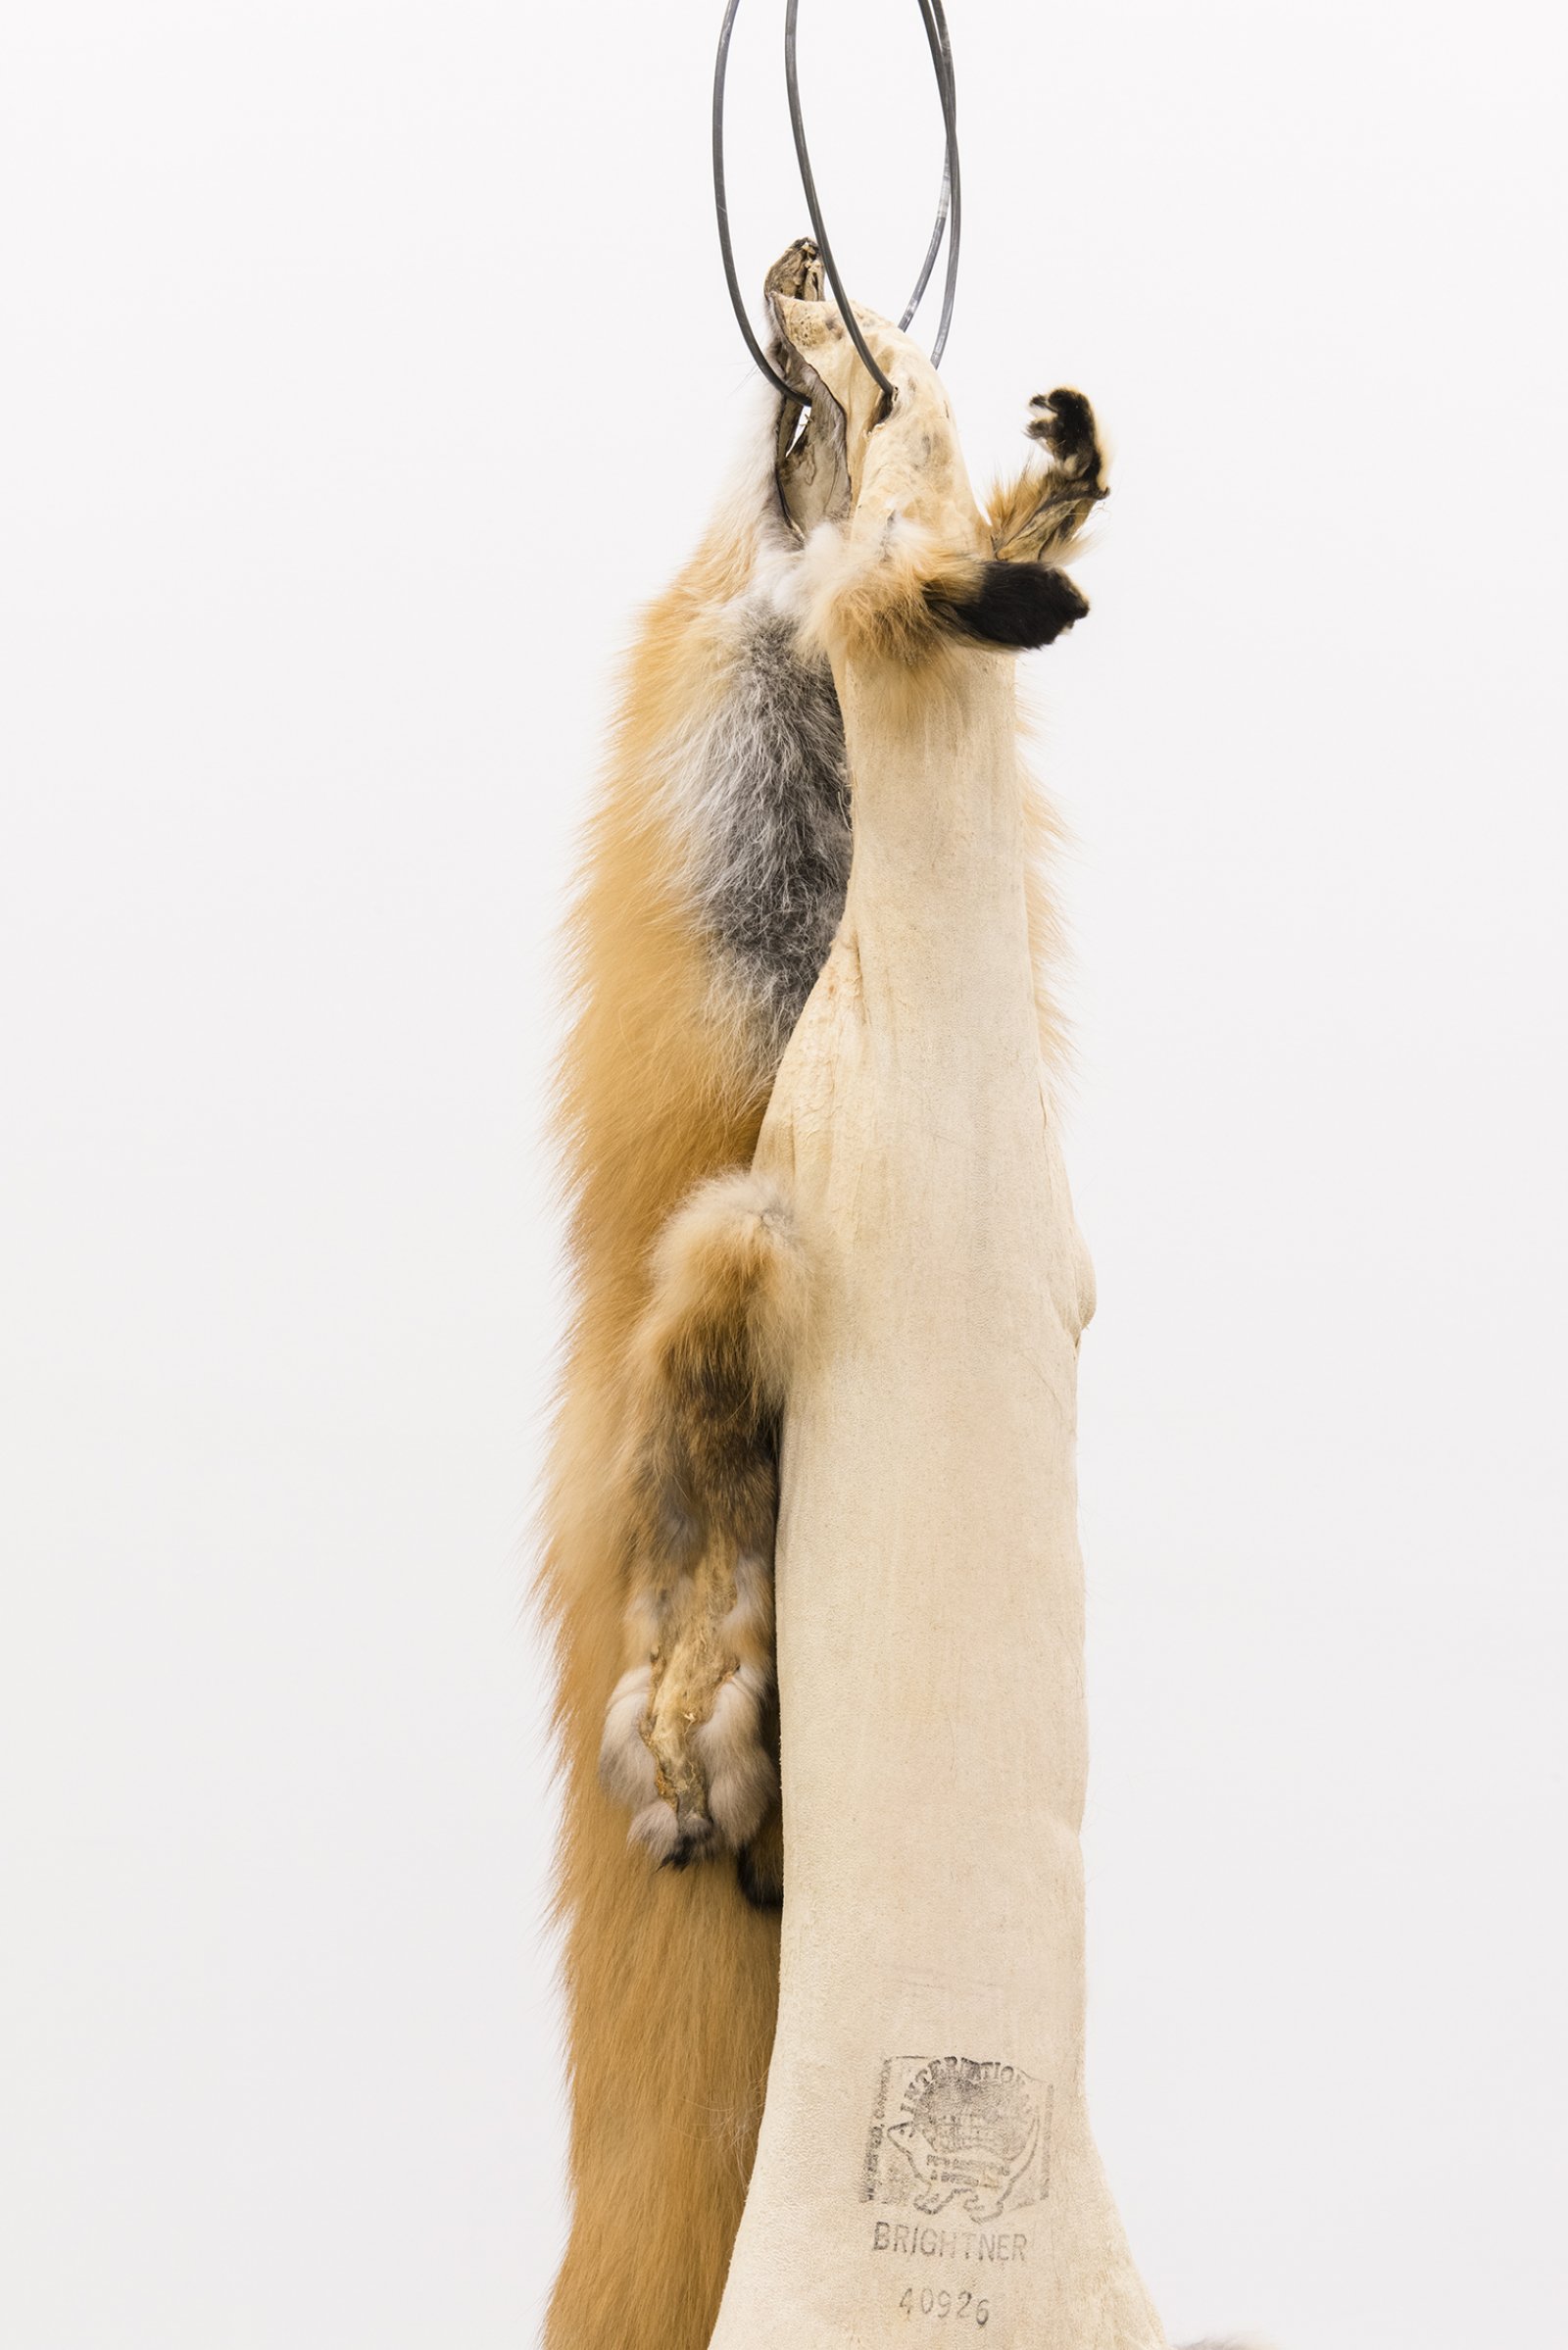 Duane Linklater, Kiss (detail), 2014, fox furs, garment rack, hangers, 66 x 60 x 20 in. (168 x 151 x 52 cm) by Duane Linklater